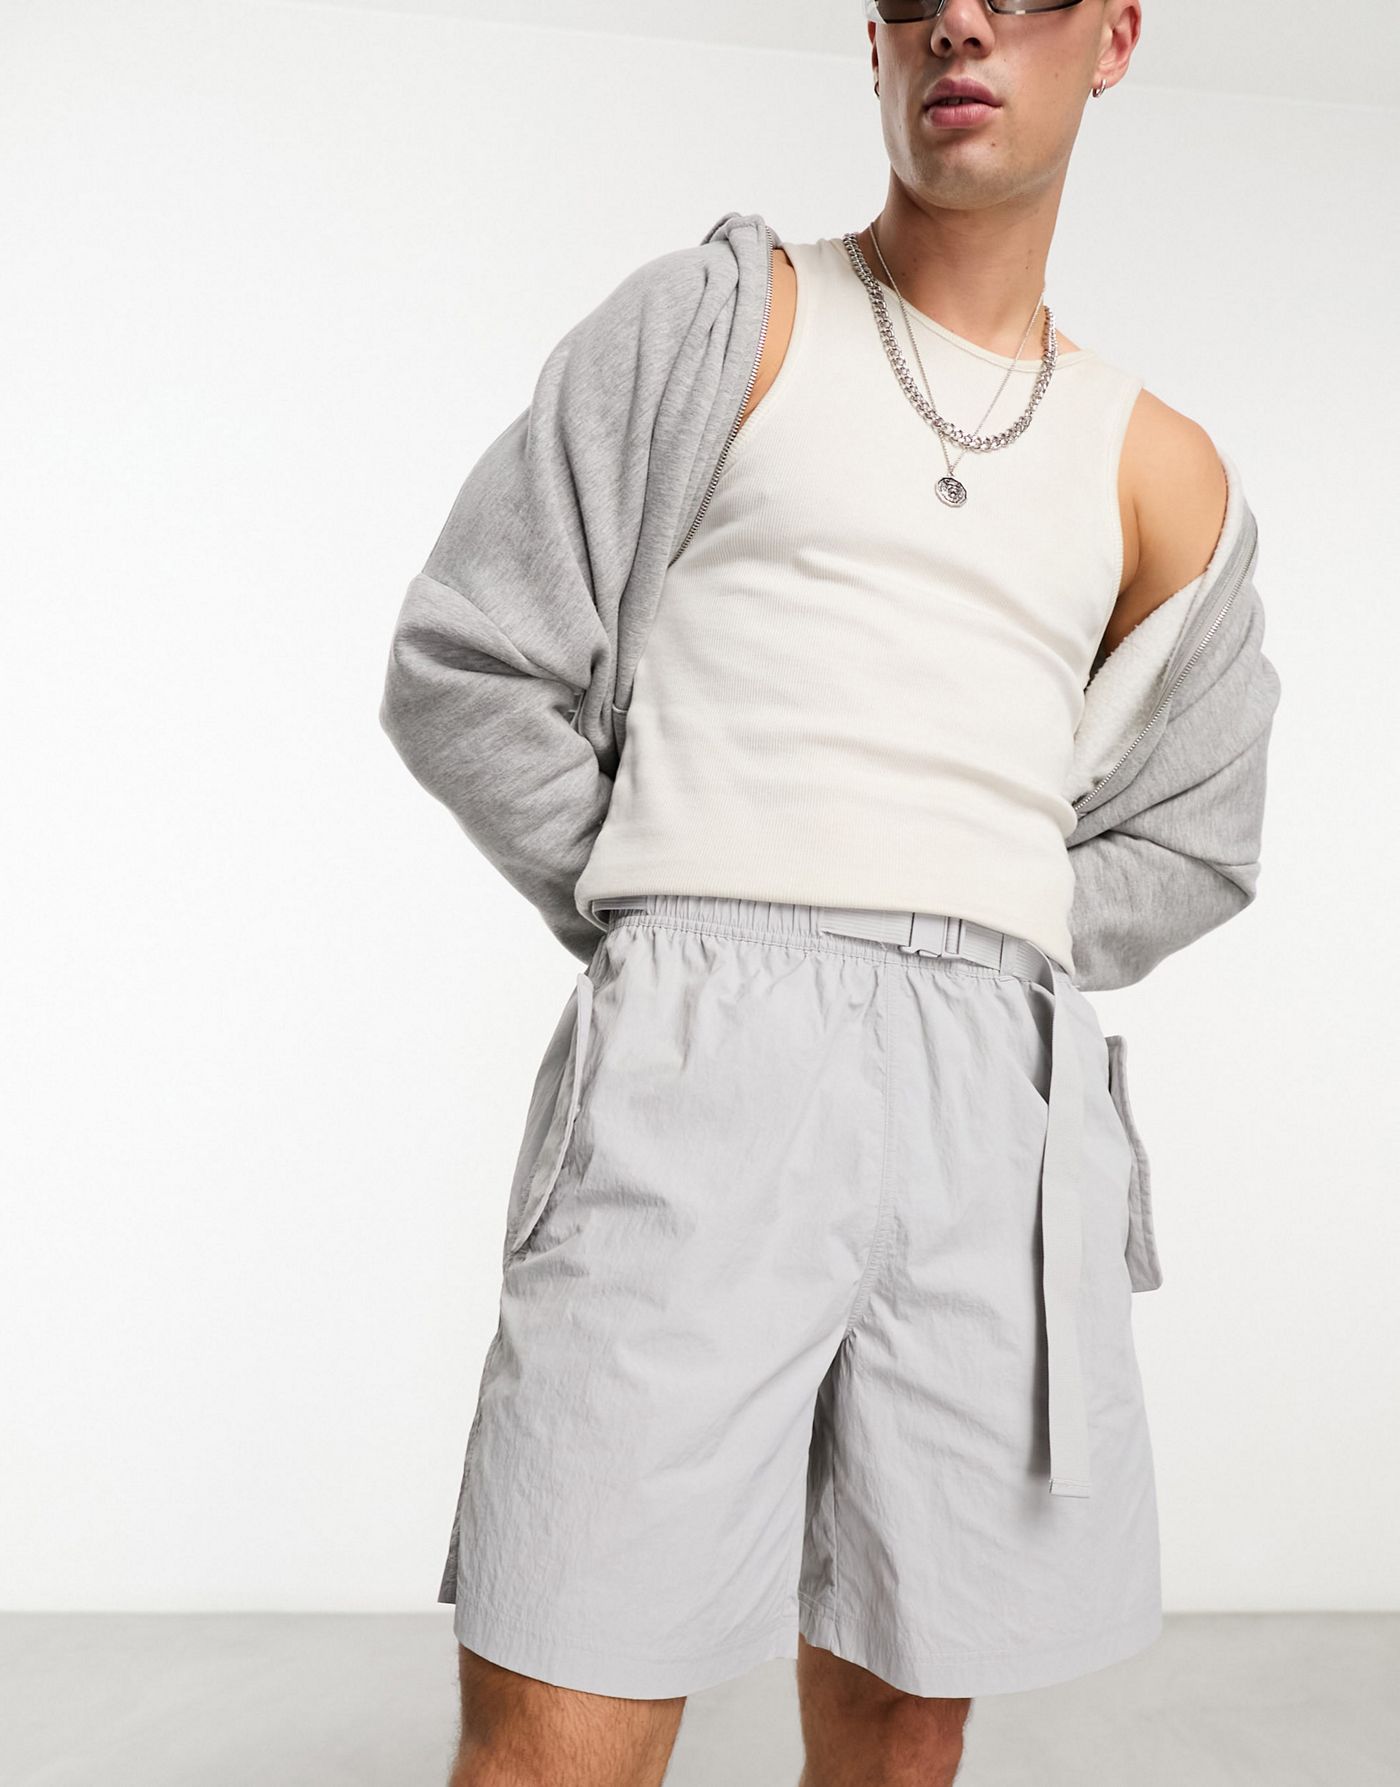 adidas Originals lightweight running short with adjustable waist belt in grey 